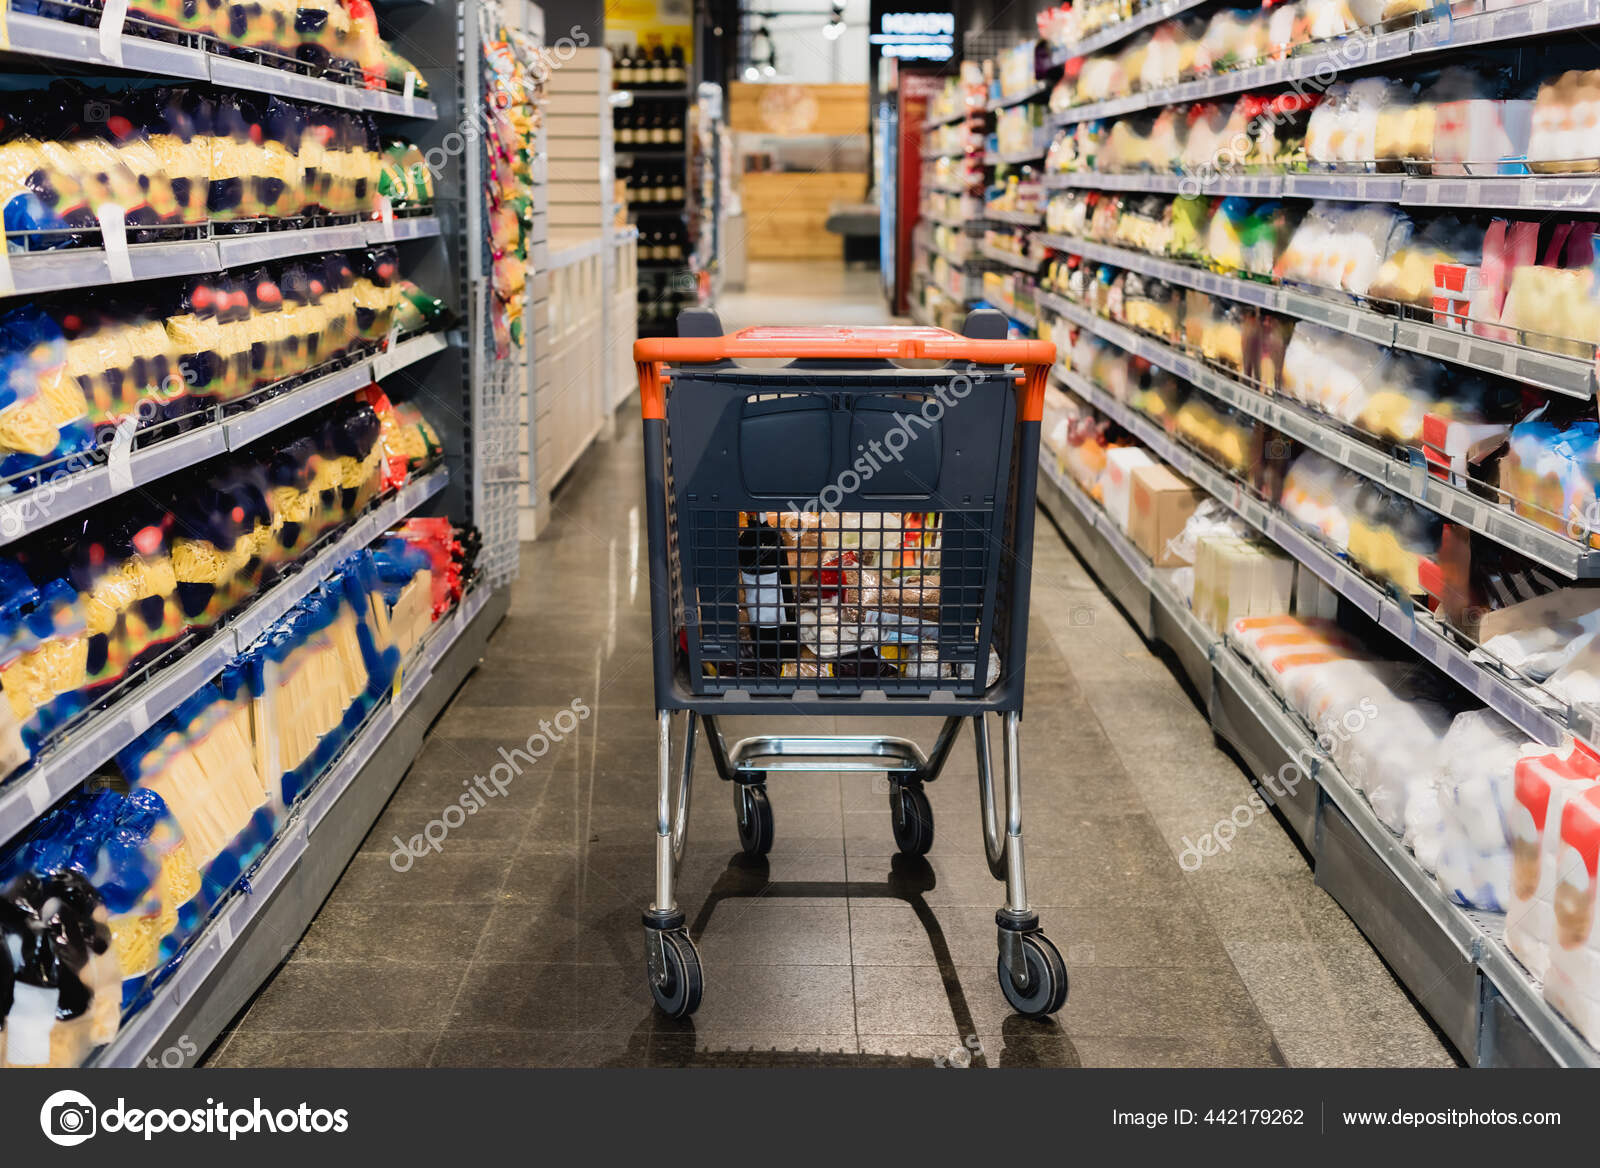 https://st2.depositphotos.com/13193658/44217/i/1600/depositphotos_442179262-stock-photo-shopping-cart-food-shelves-supermarket.jpg